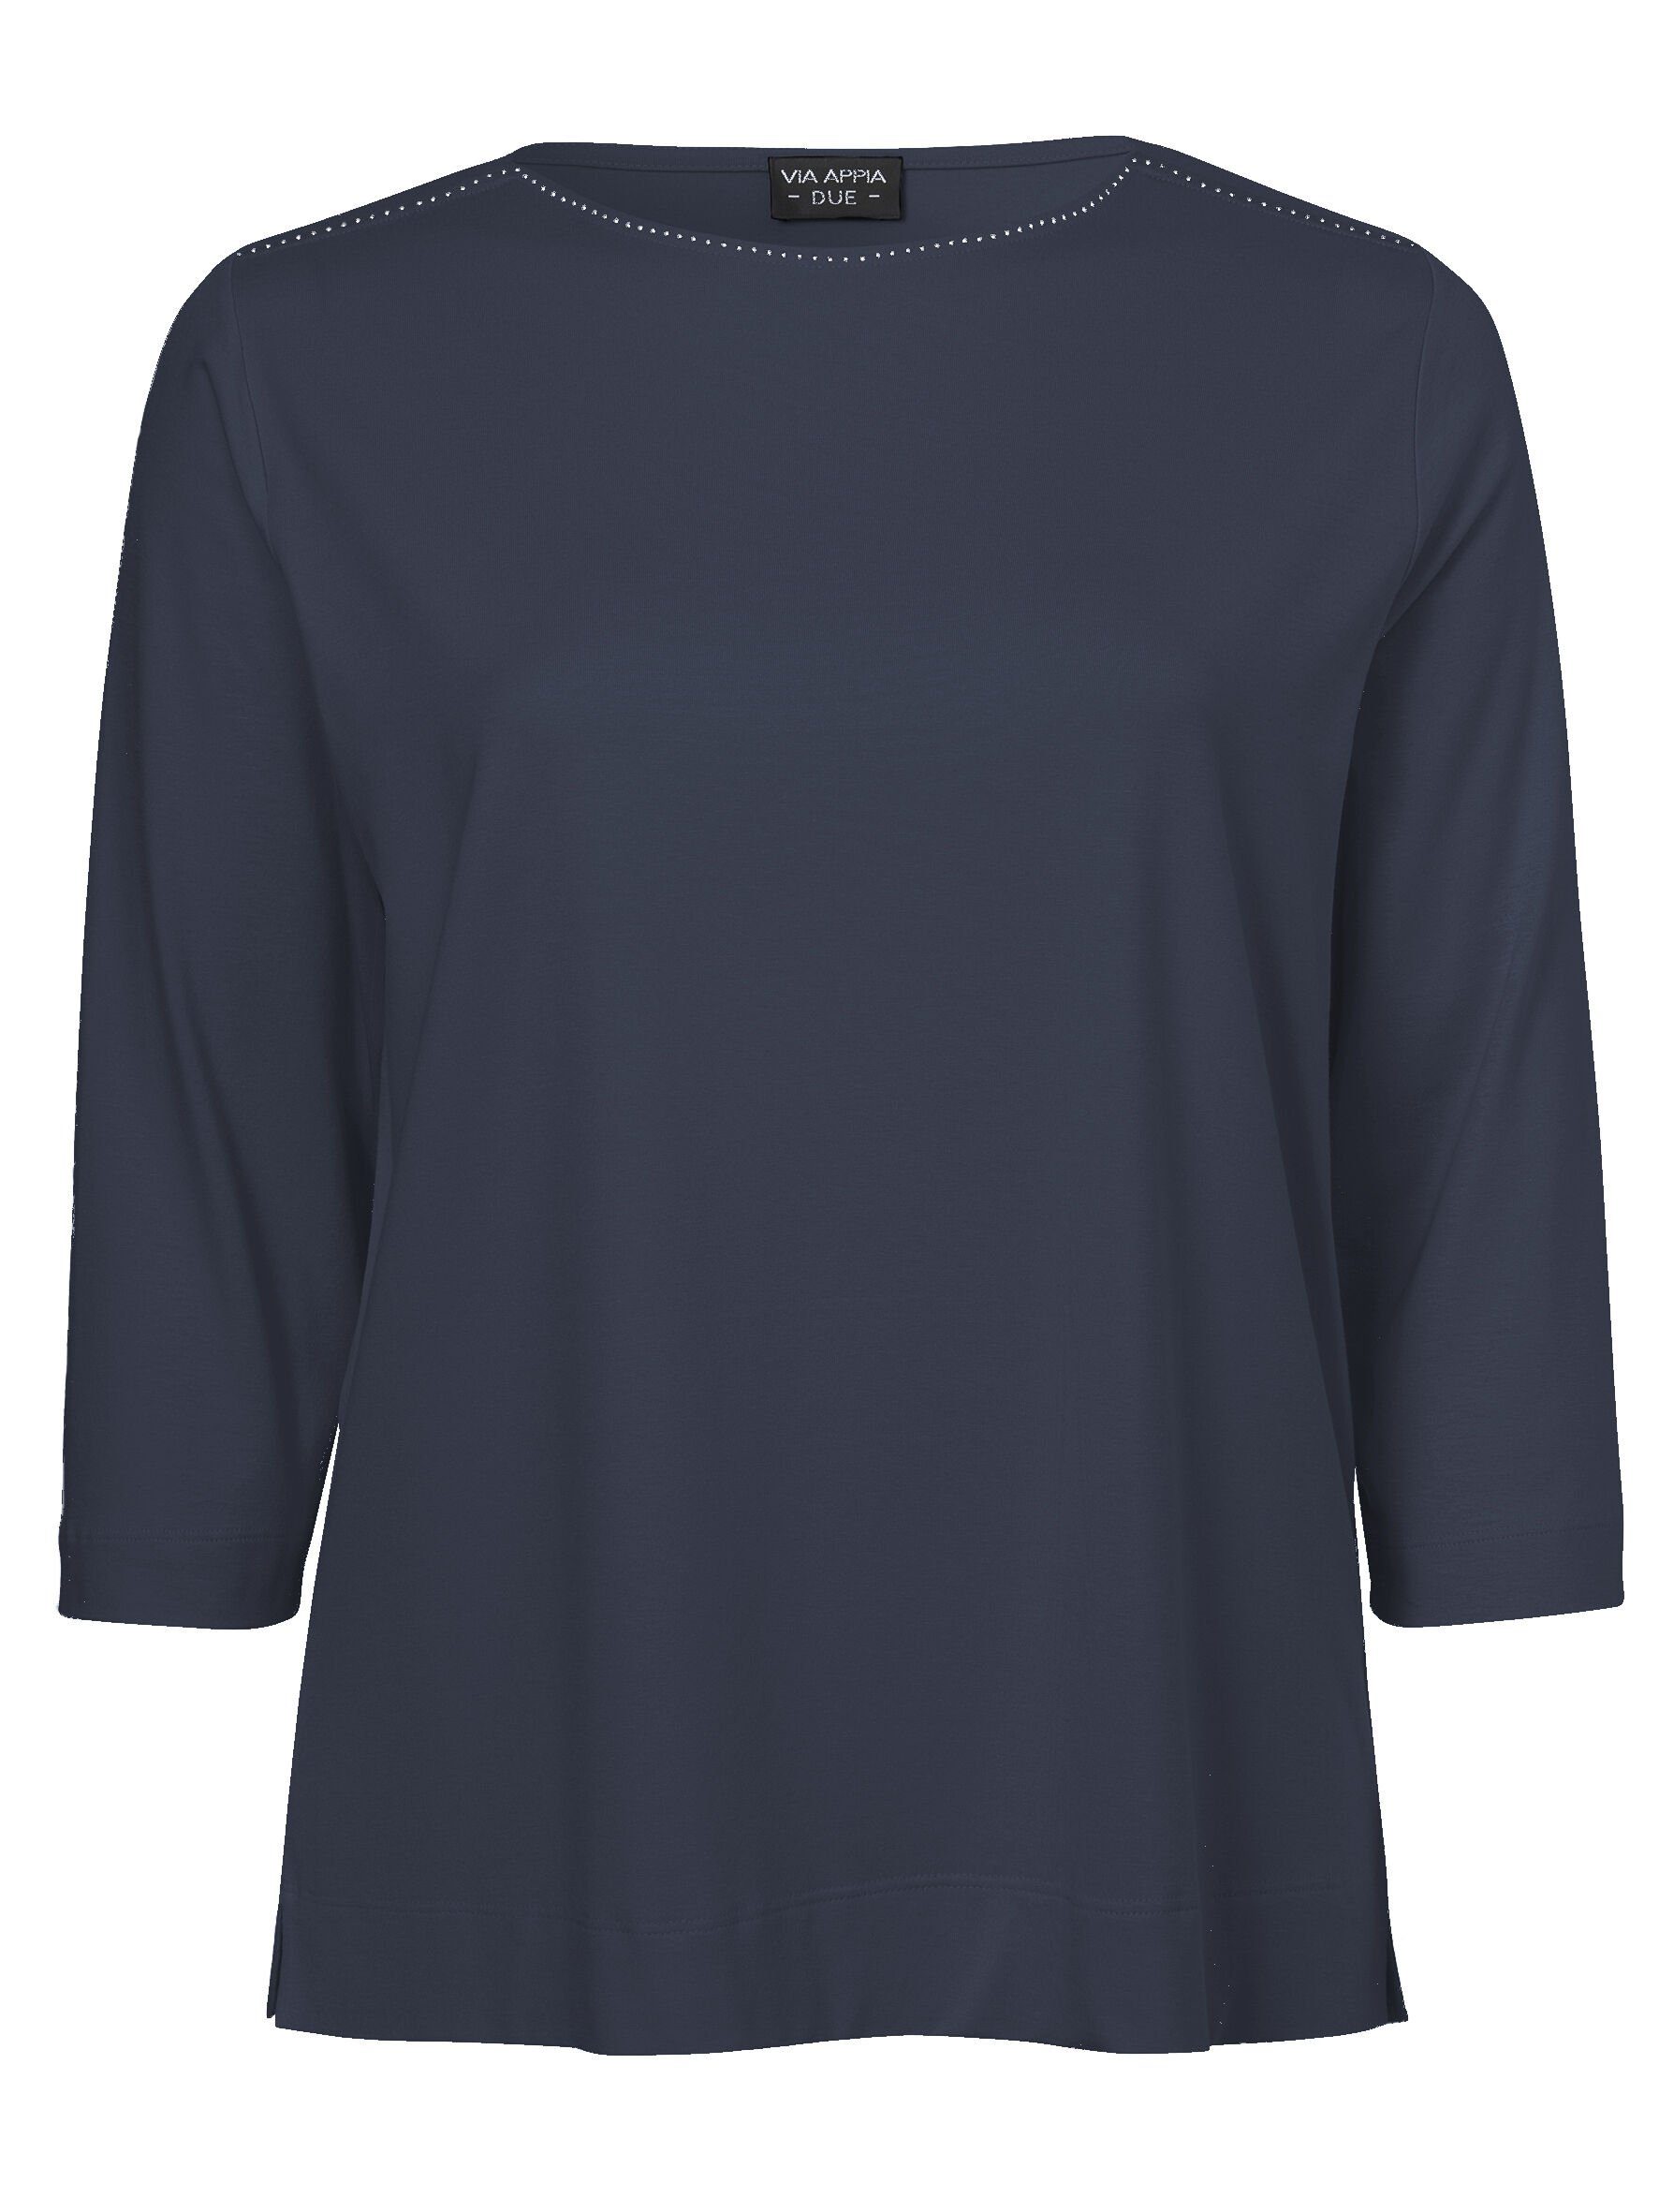 VIA APPIA DUE Sweatshirt Dezentes 3/4-Arm-Shirt in unifarbenem Stil | T-Shirts